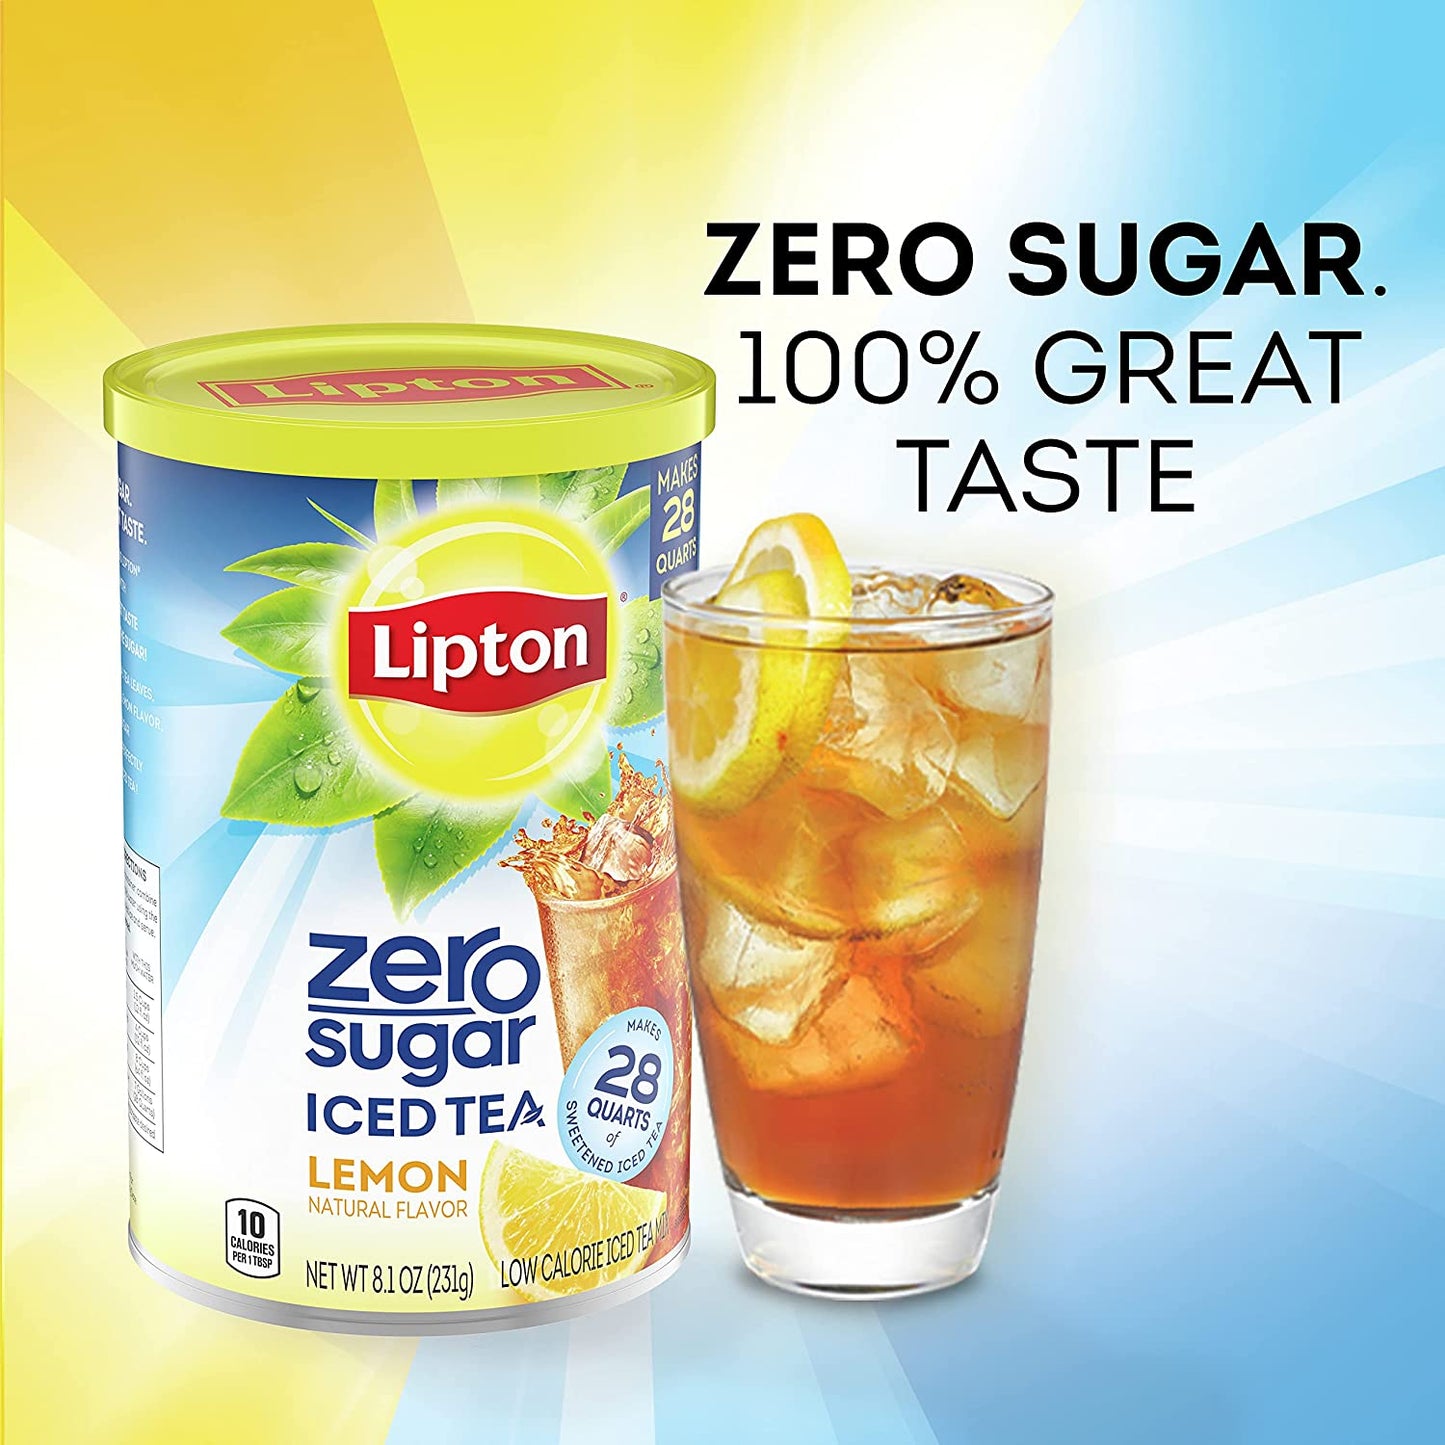 Lipton Zero Sugar Iced Tea Mix, Lemon Low Calorie, Makes 28 Quarts (Pack of 6)